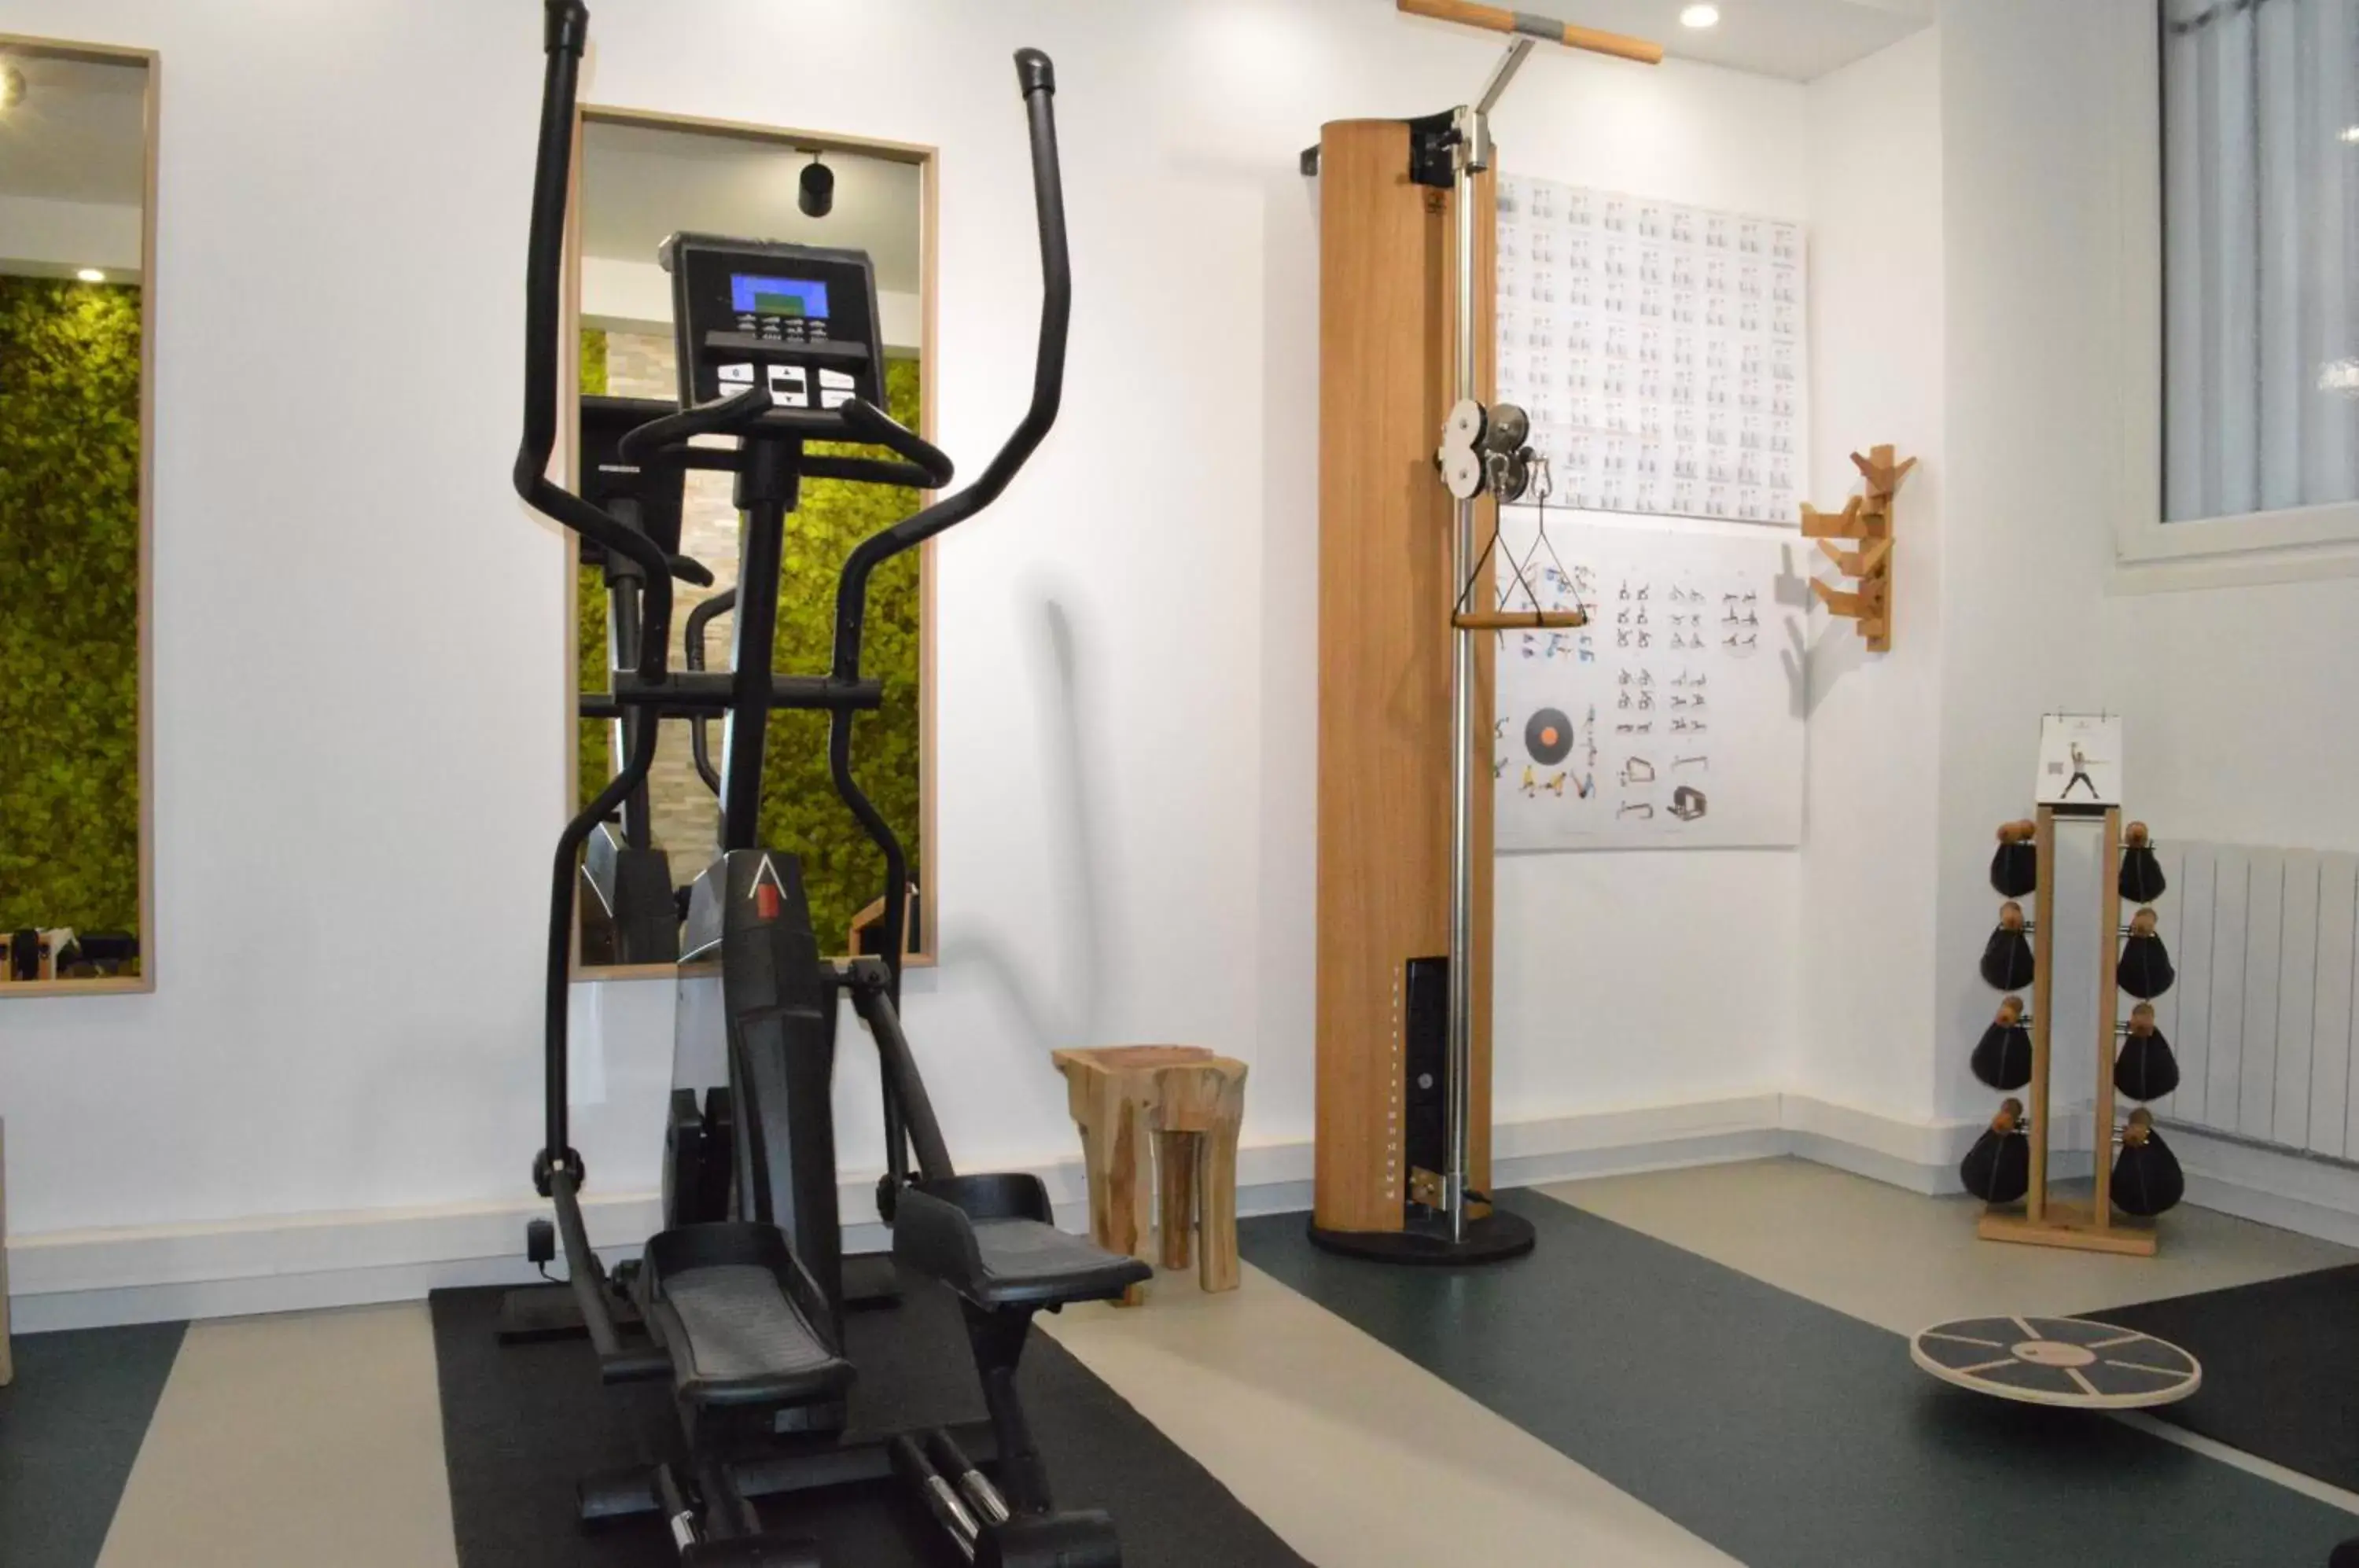 Fitness centre/facilities, Fitness Center/Facilities in Ambassadeur Hotel - Cherbourg Port de Plaisance